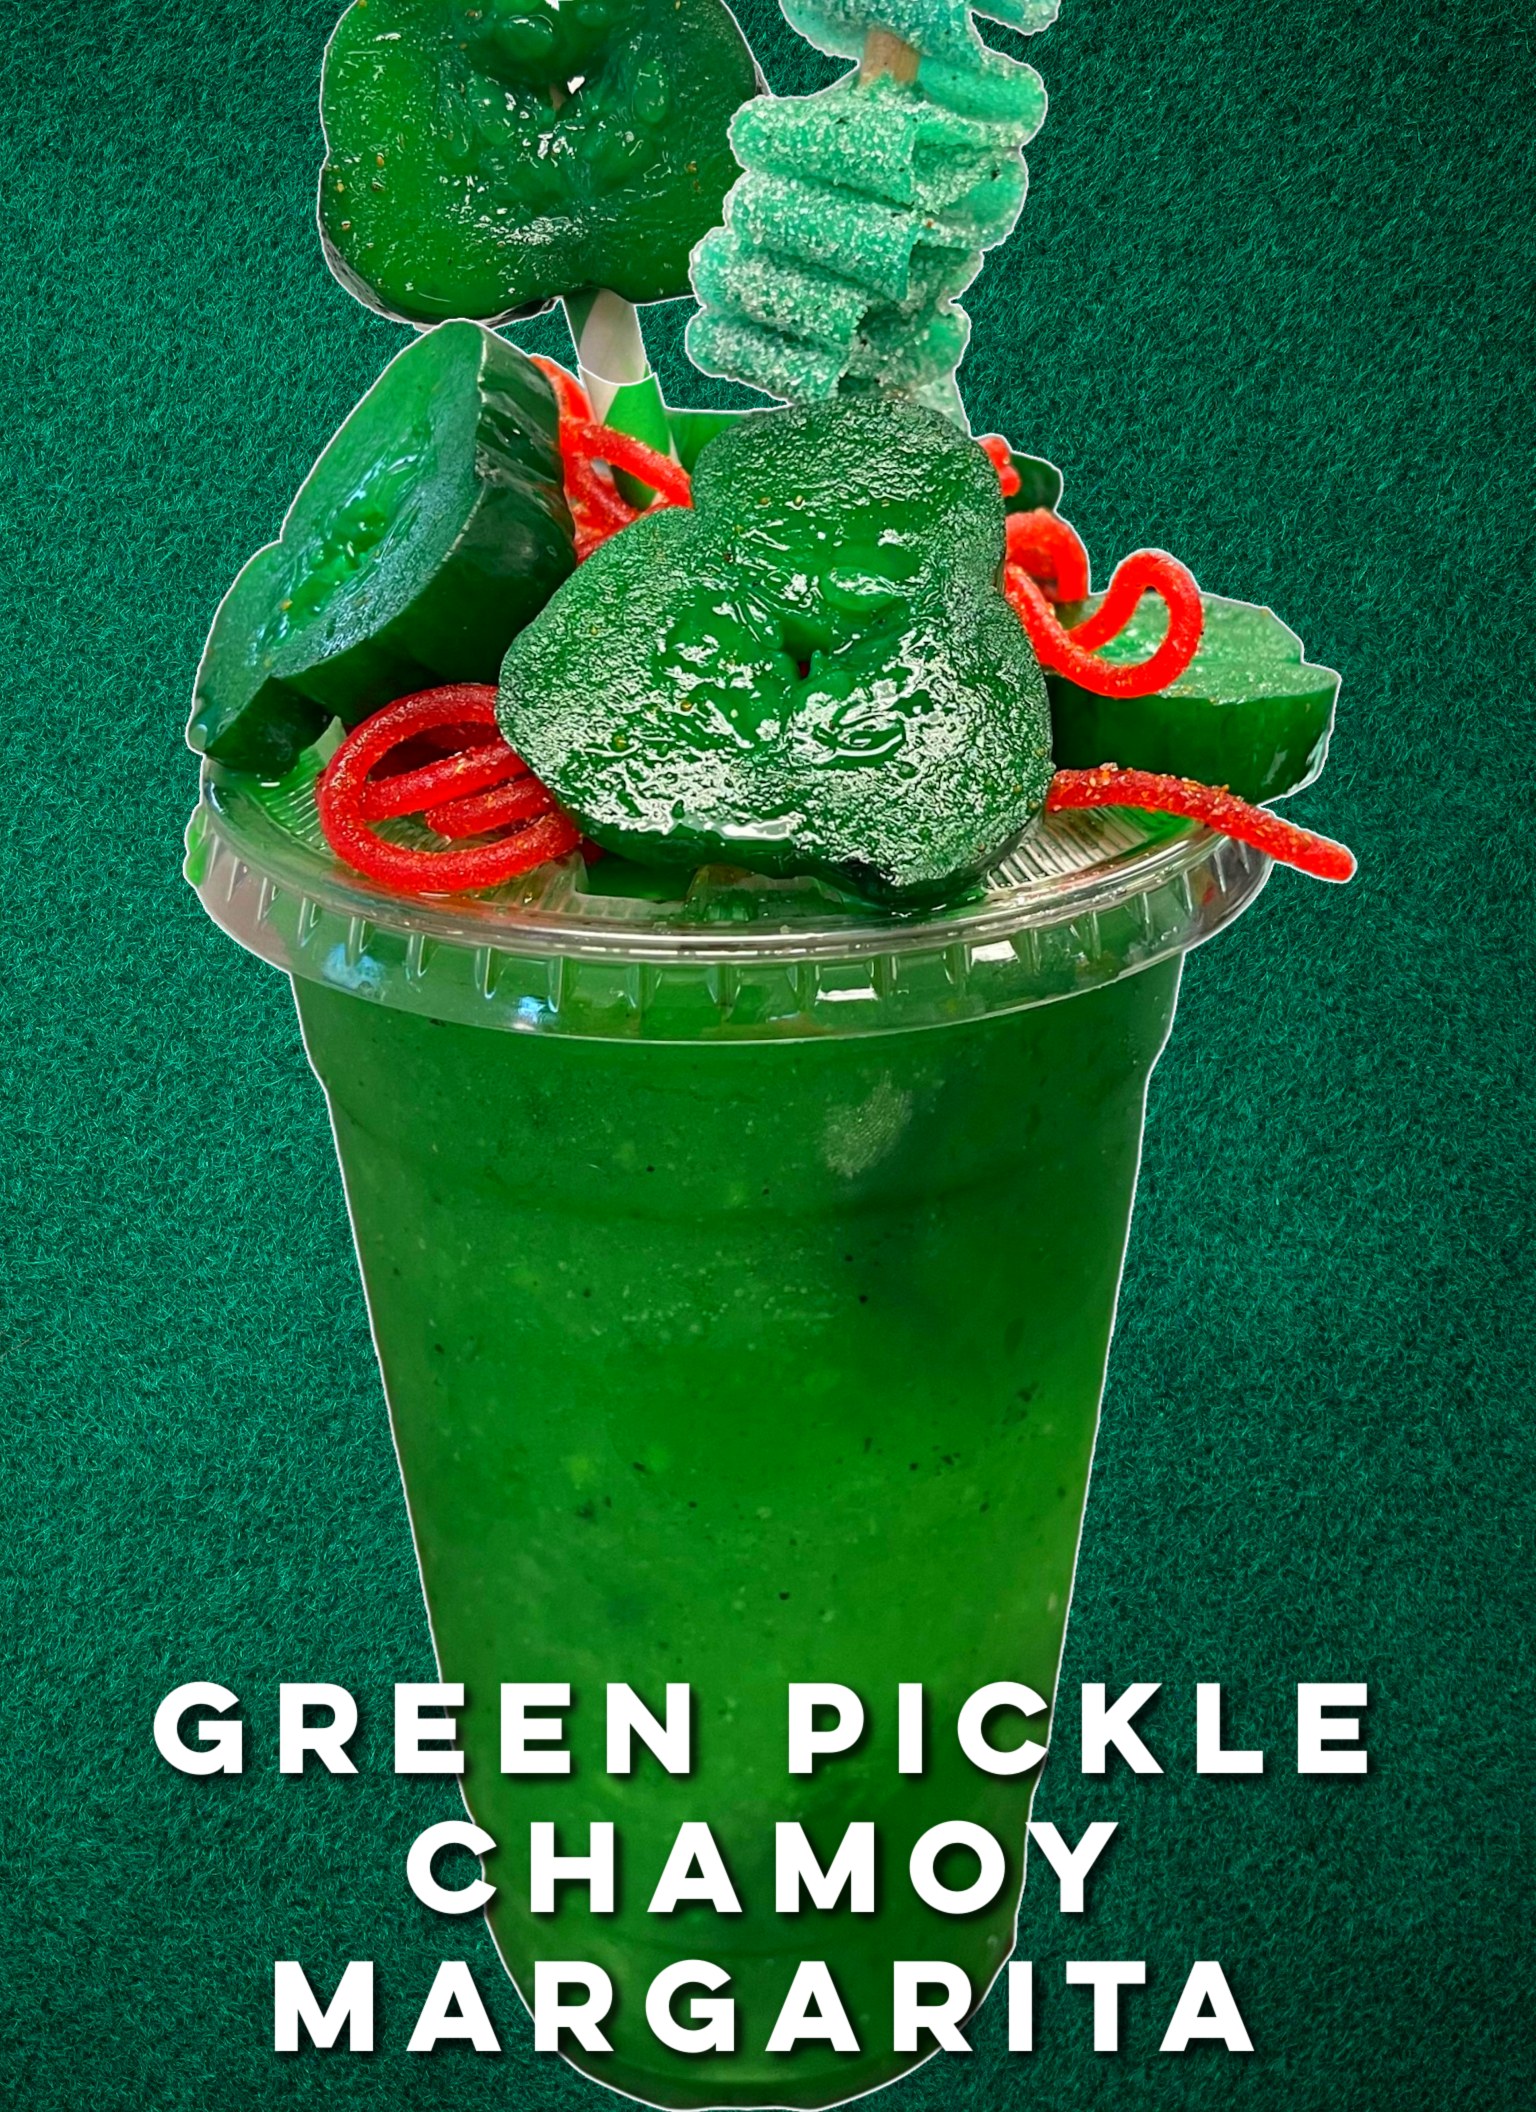 Green Pickle Chamoy Margarita